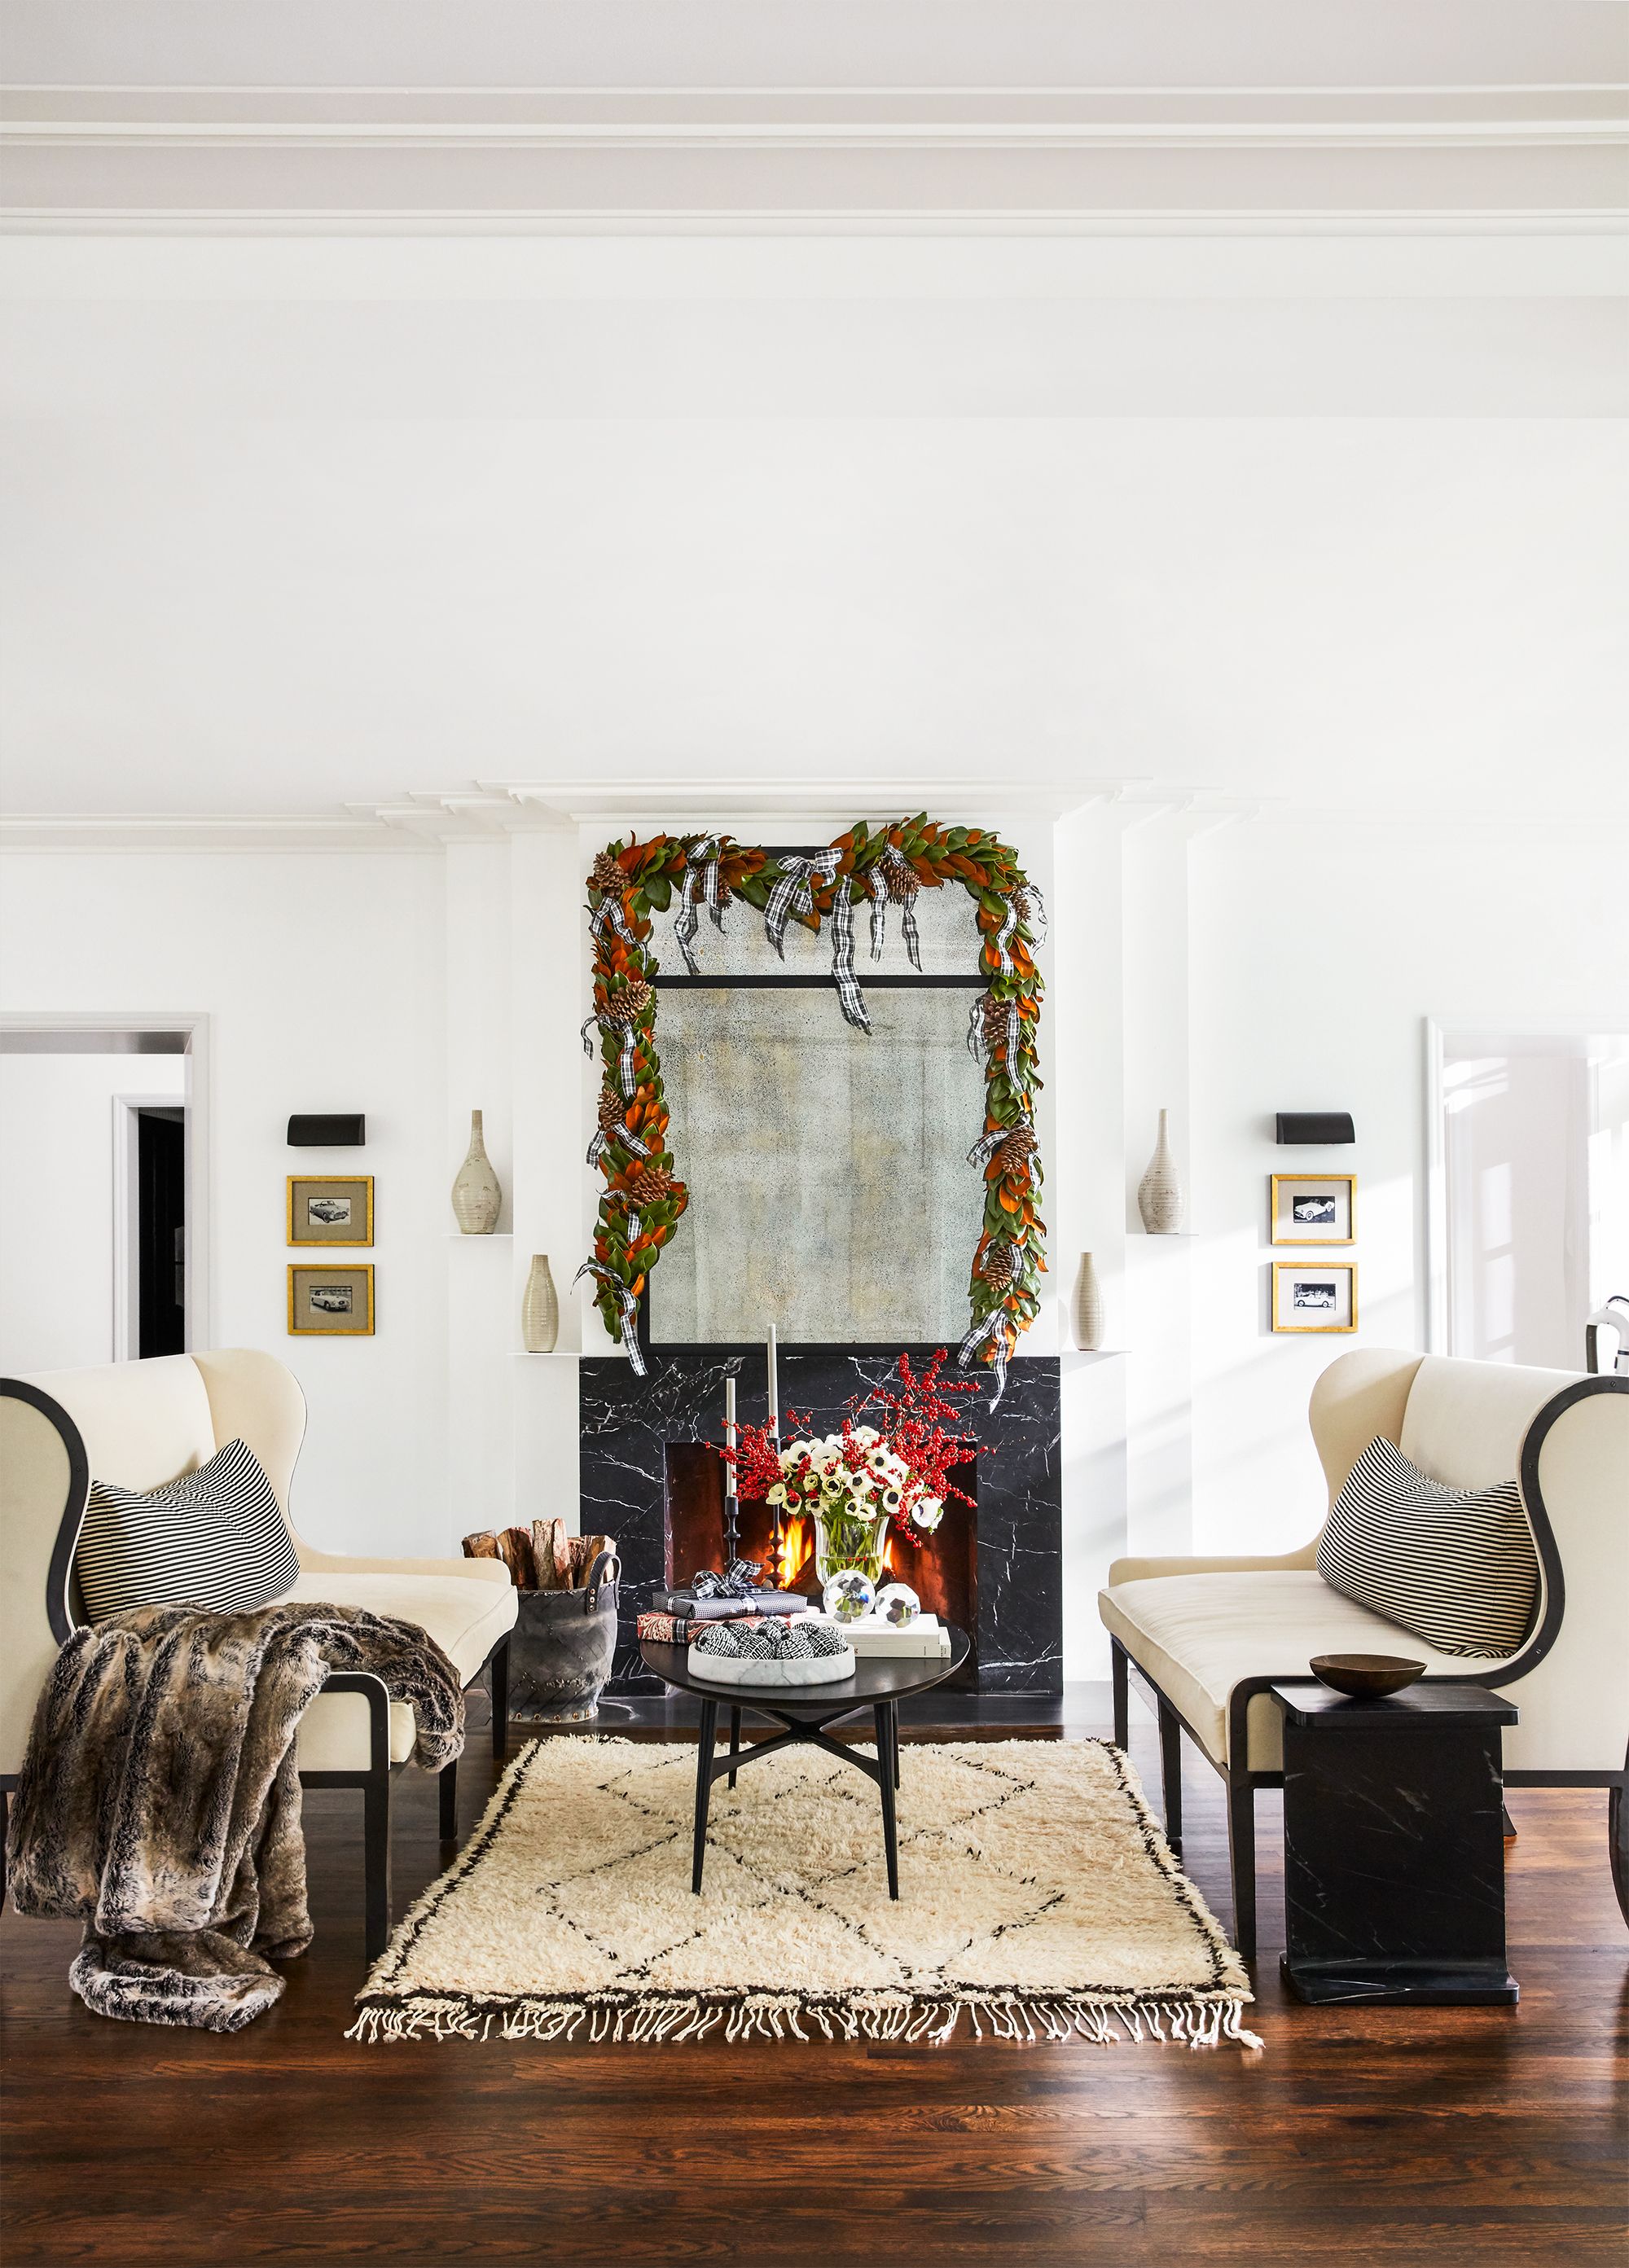 100 Christmas Home Decorating Ideas - Beautiful Christmas Decorations